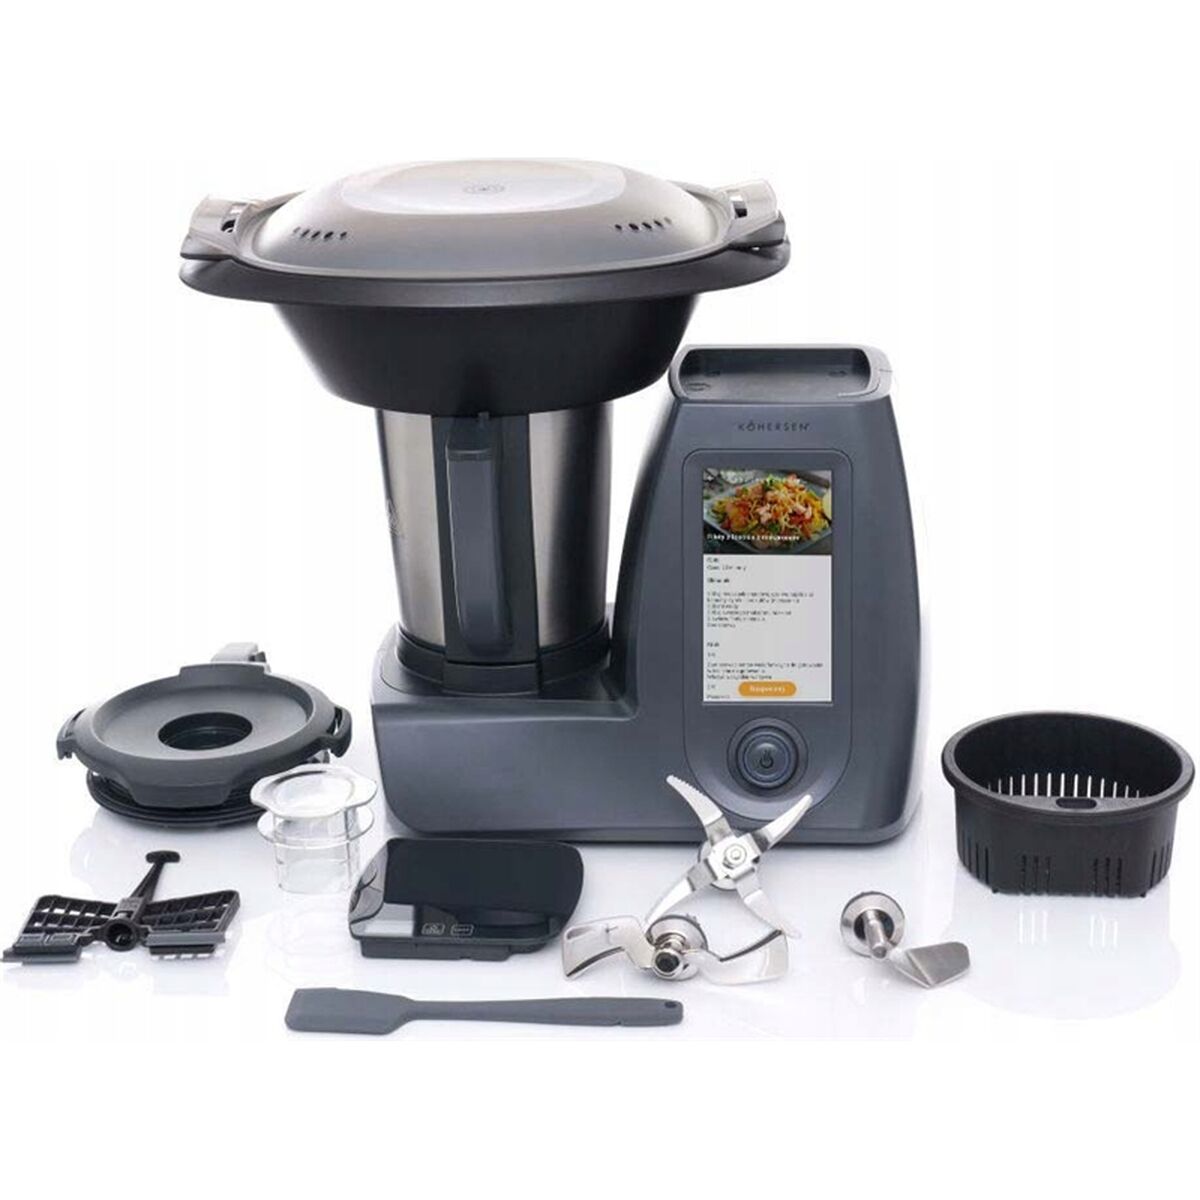 Küchenmaschine Kohersen CY021 Grau 1000 W 3,3 L - CA International 